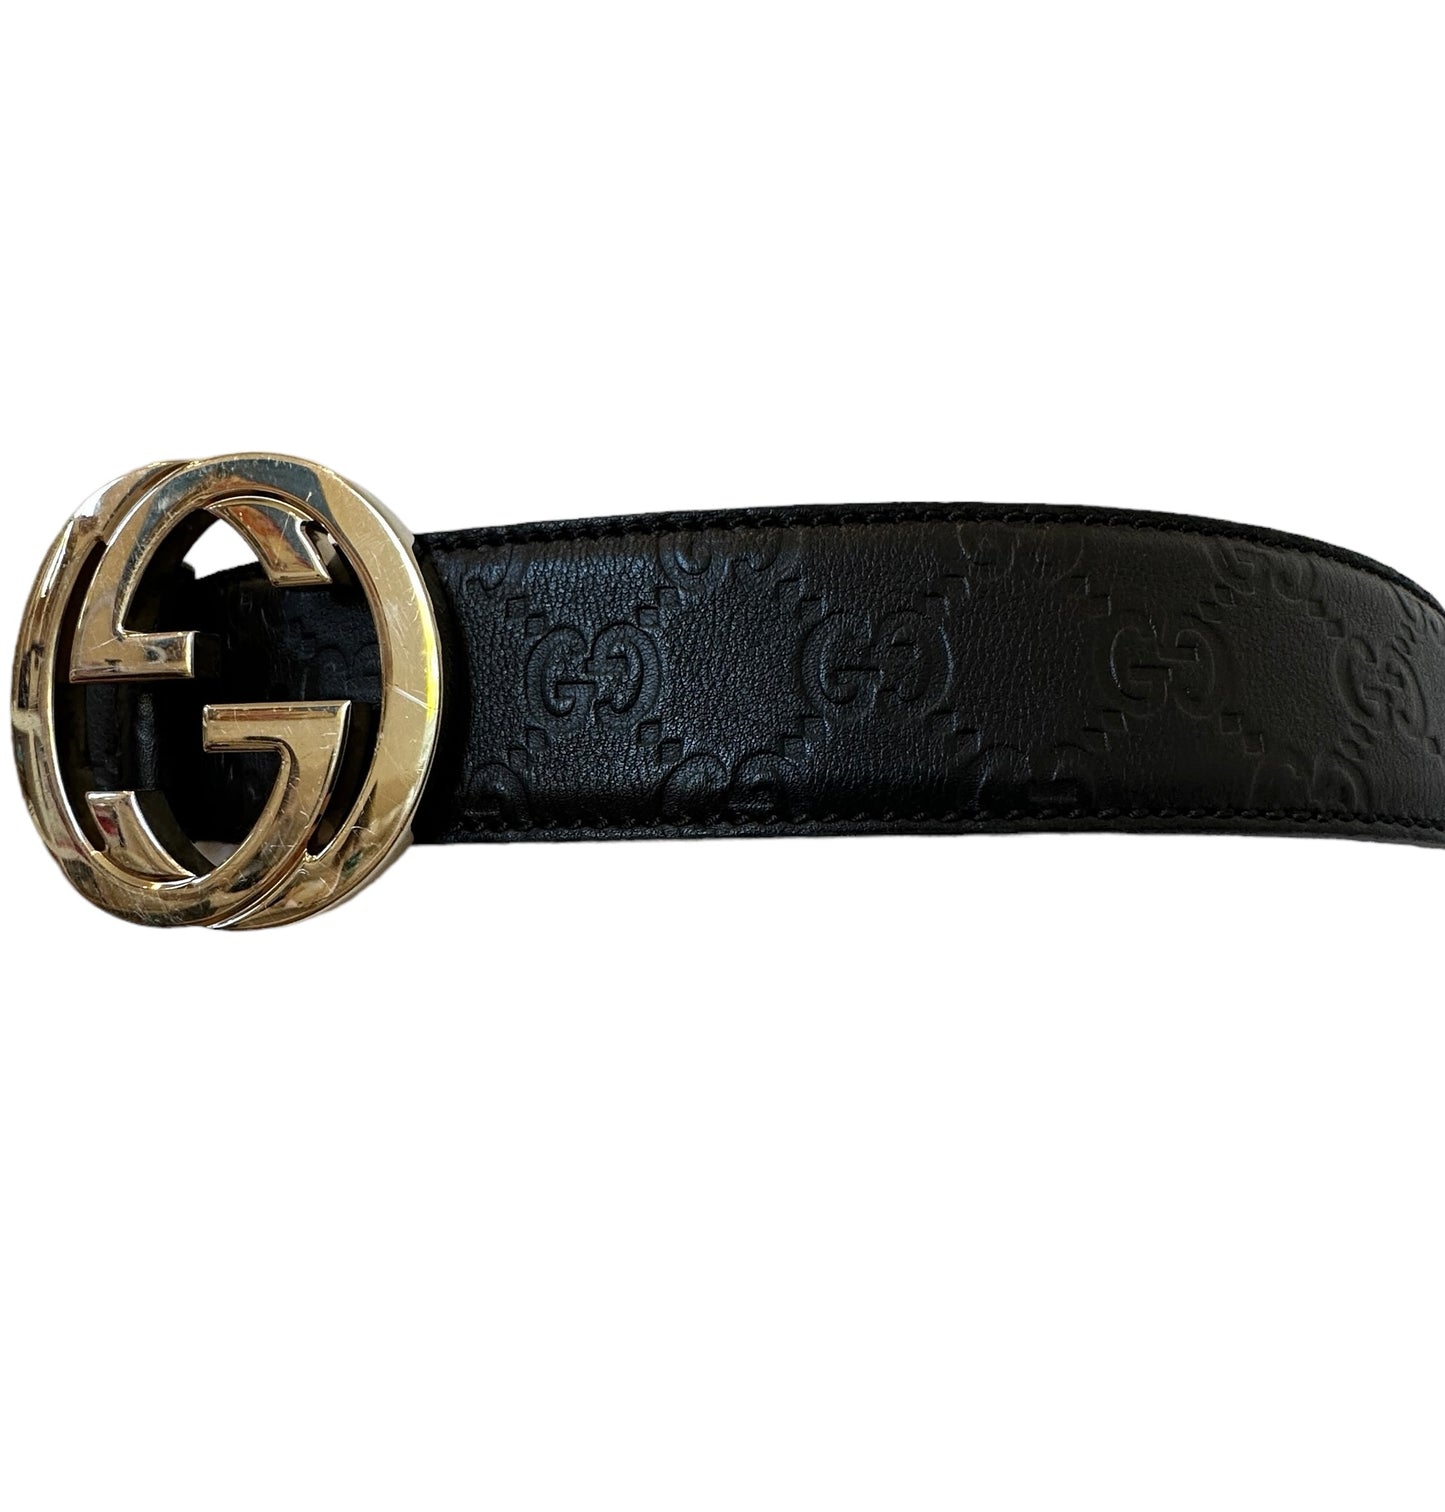 GG Monogram Leather Belt - L